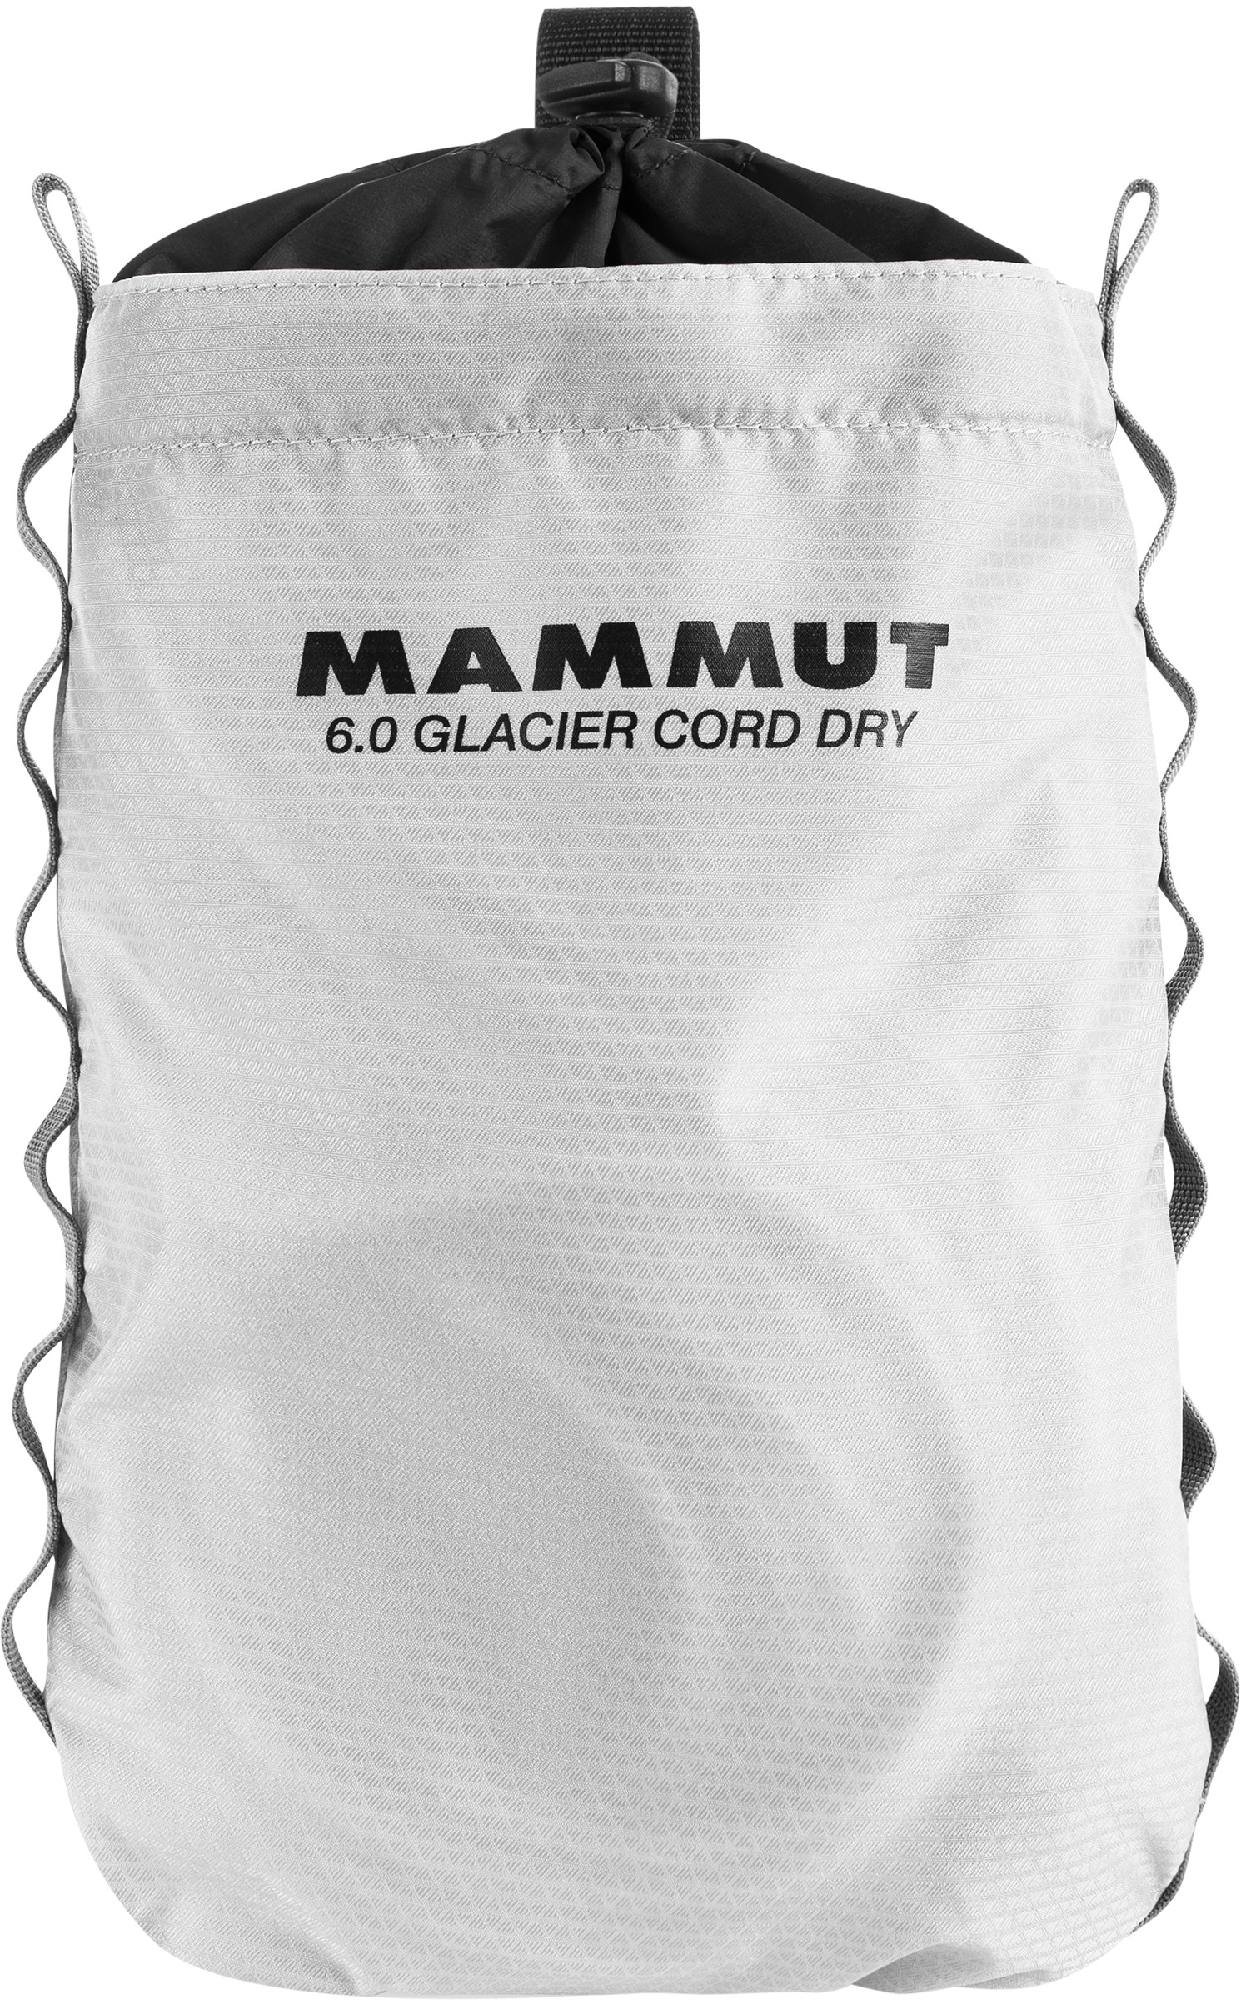 Mammut Glacier Cord Dry 6mm